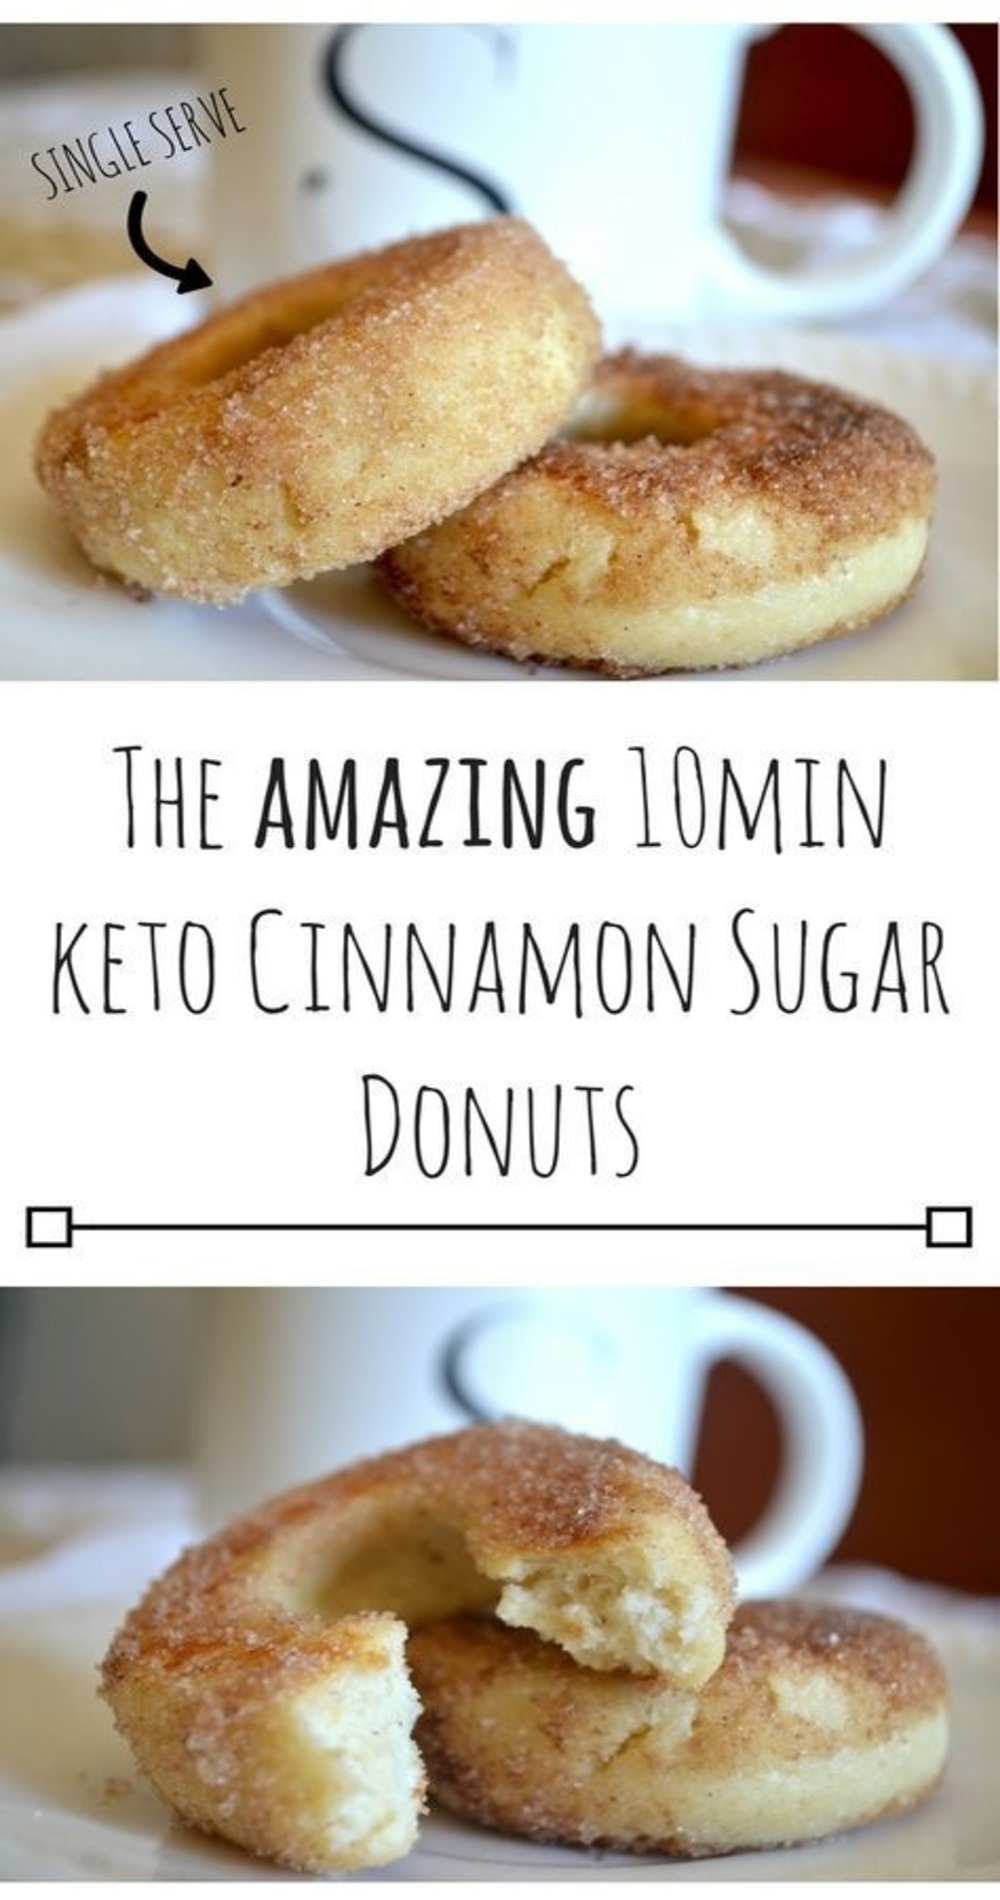 The Amazing 10min Keto Cinnamon Sugar Donuts